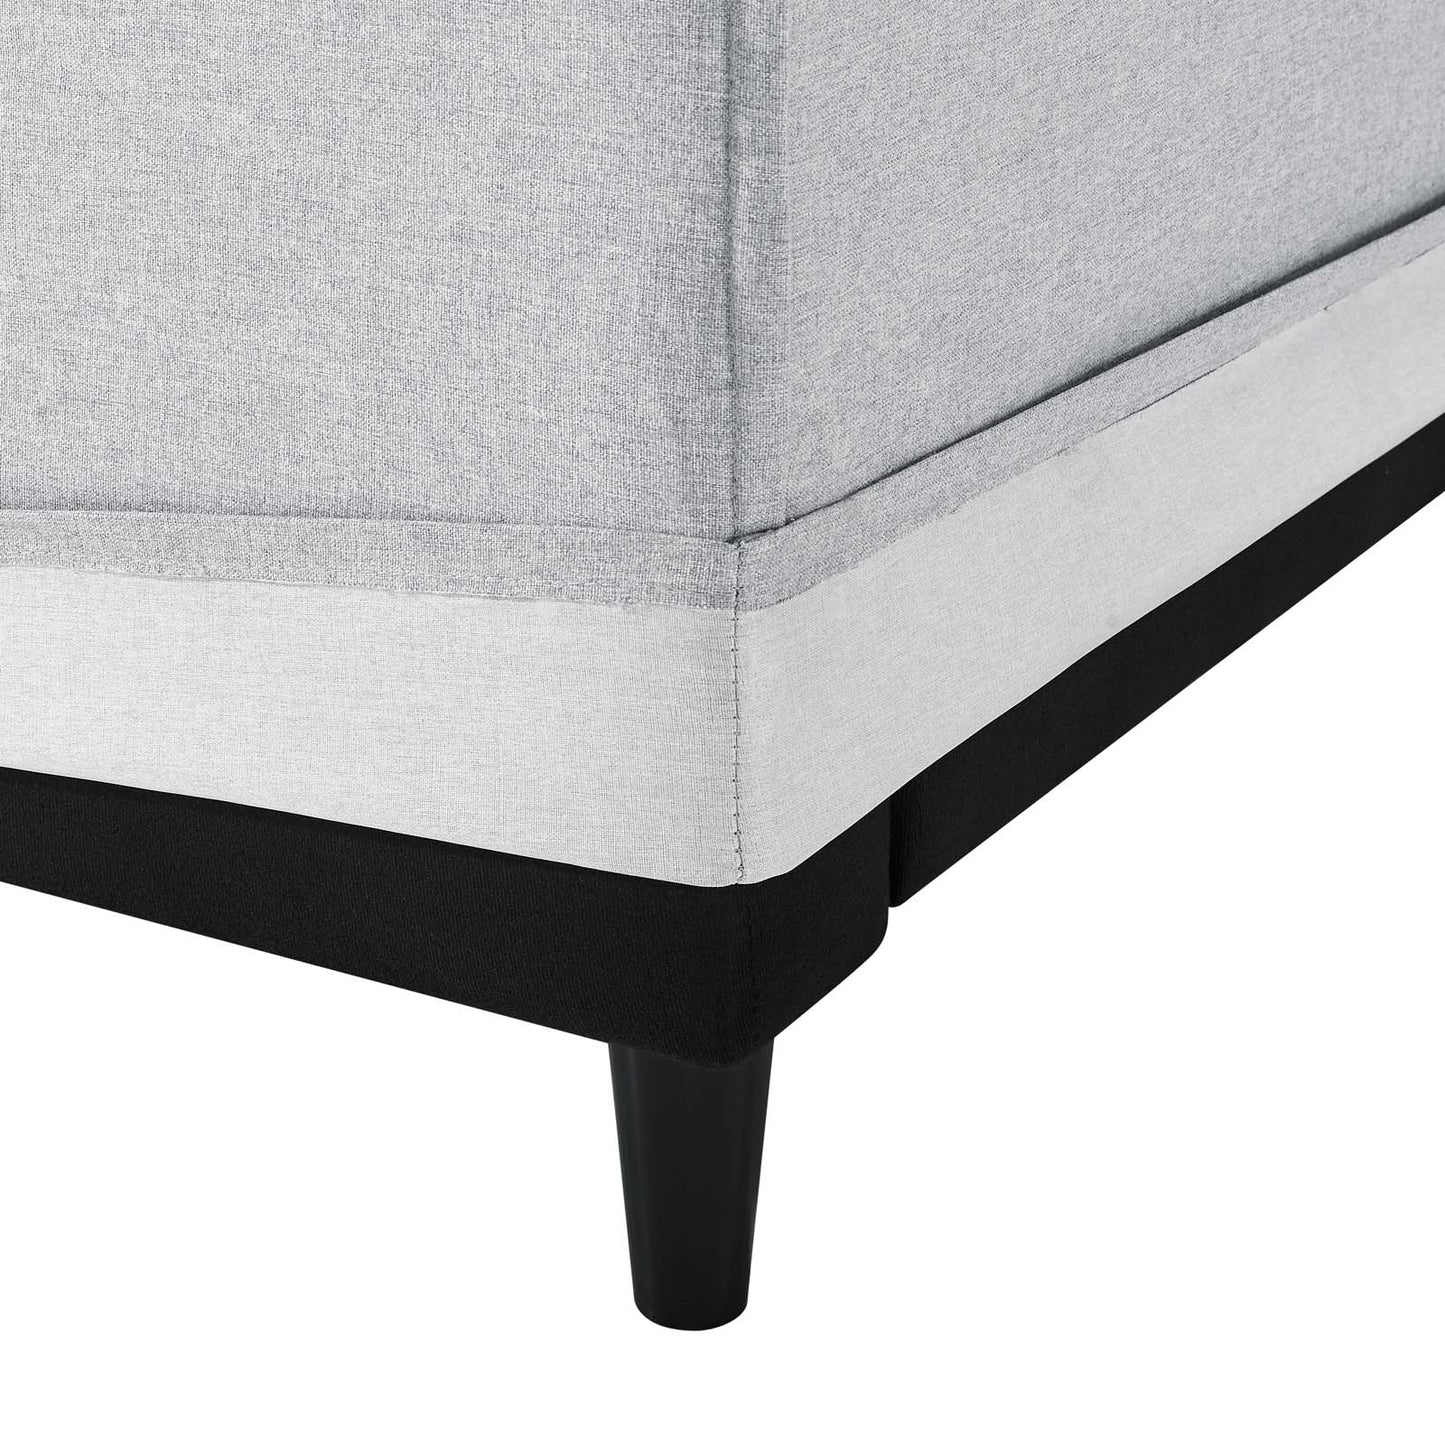 Avalon Slipcover Fabric Sofa Light Gray EEI-4449-LGR